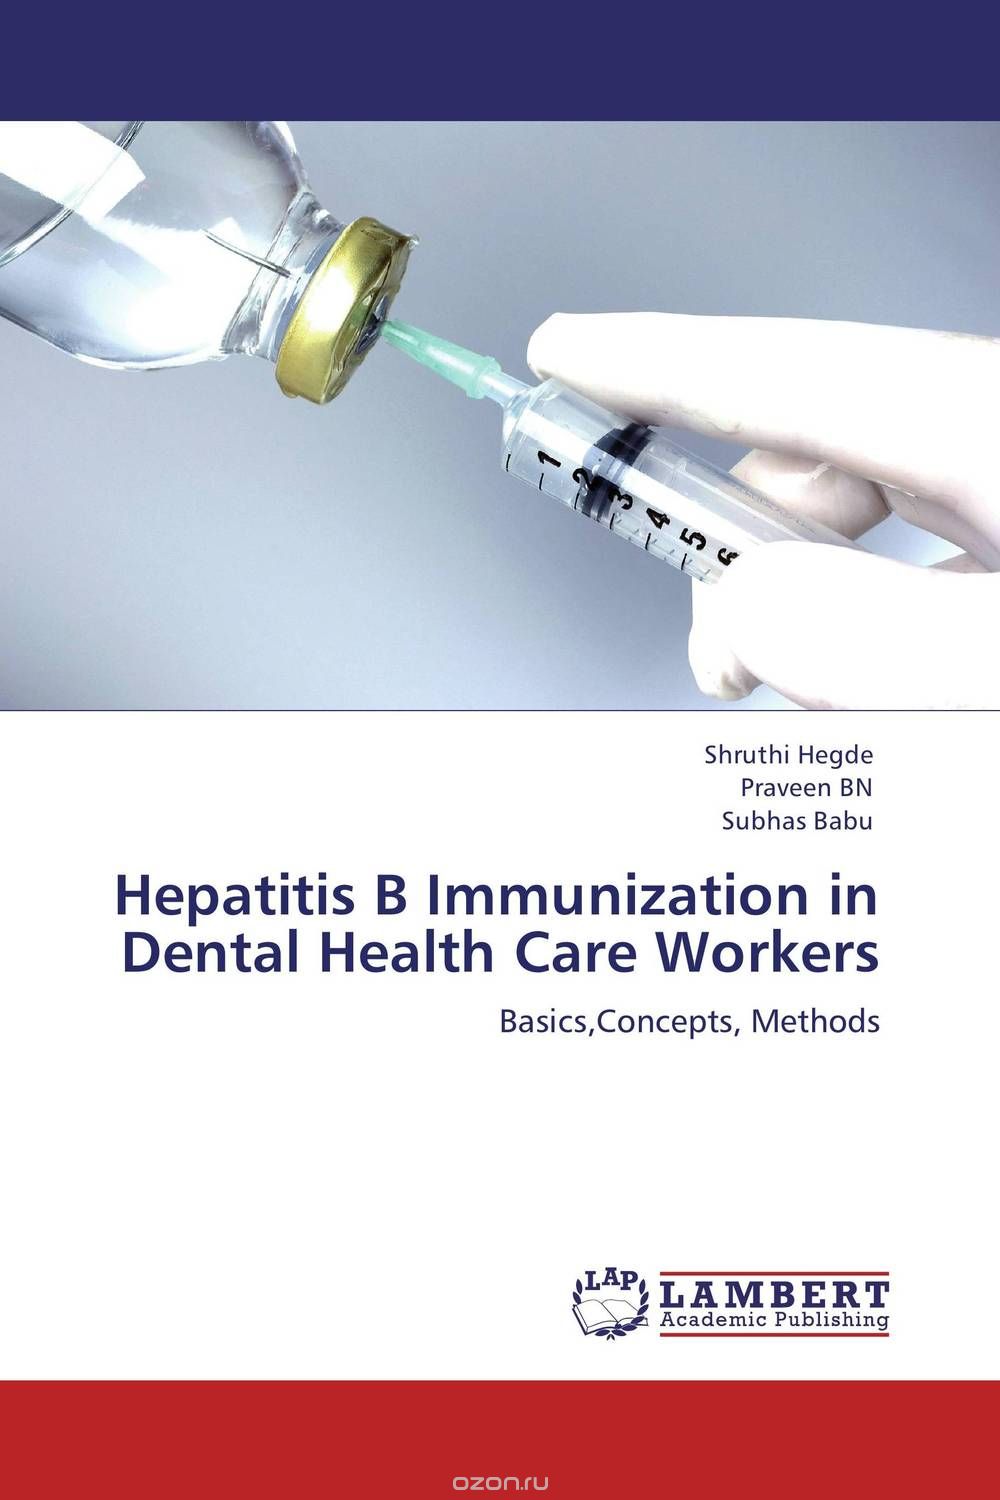 Скачать книгу "Hepatitis B Immunization in Dental Health Care Workers"